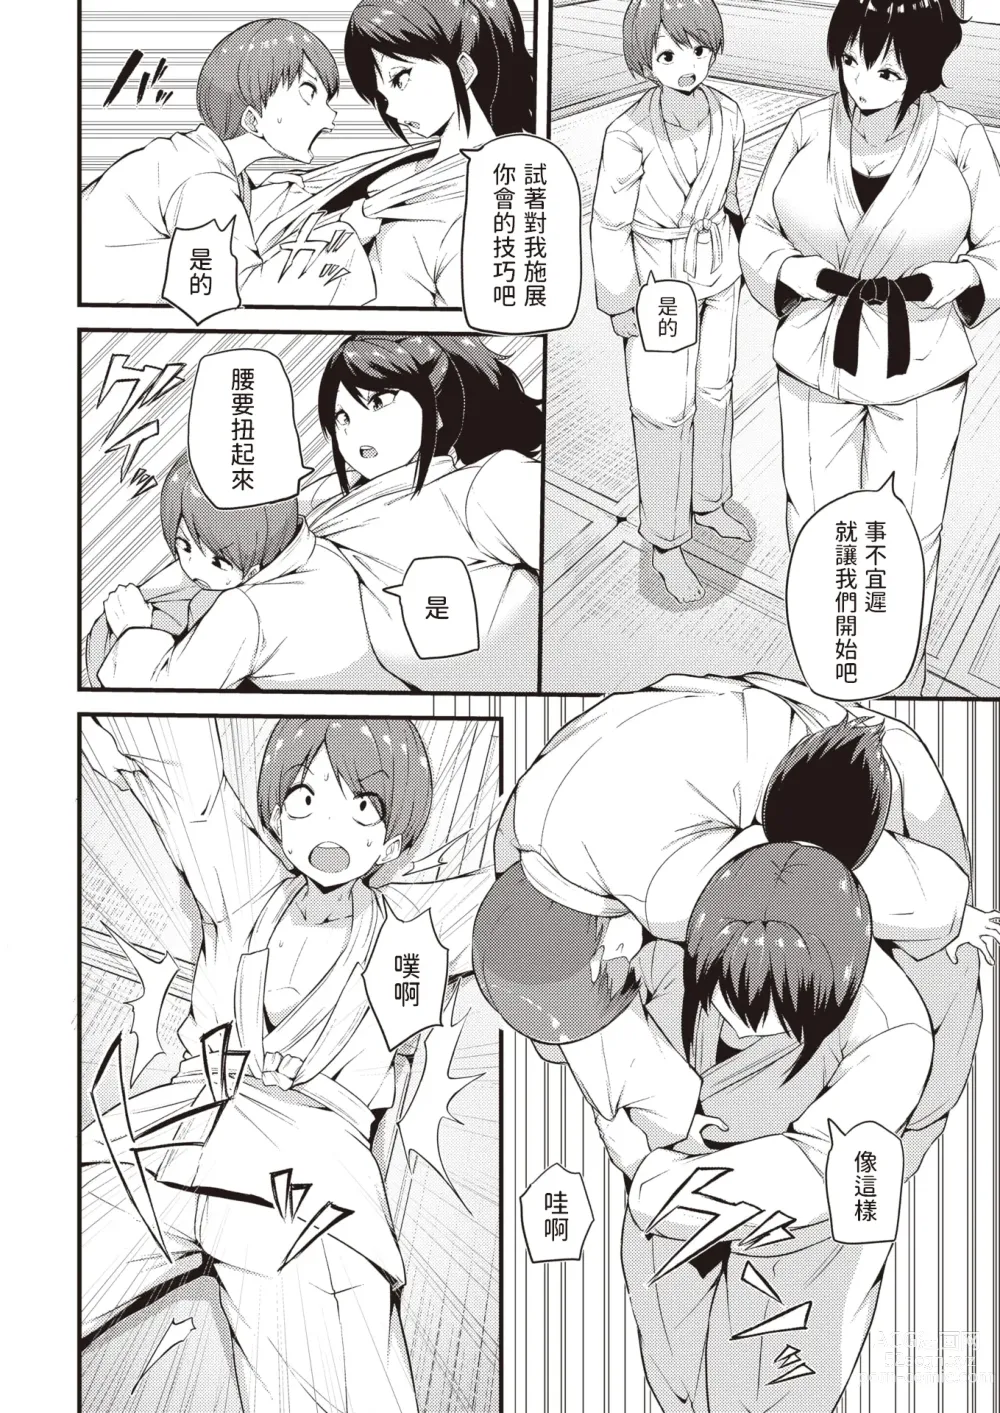 Page 6 of manga Futari de Keiko